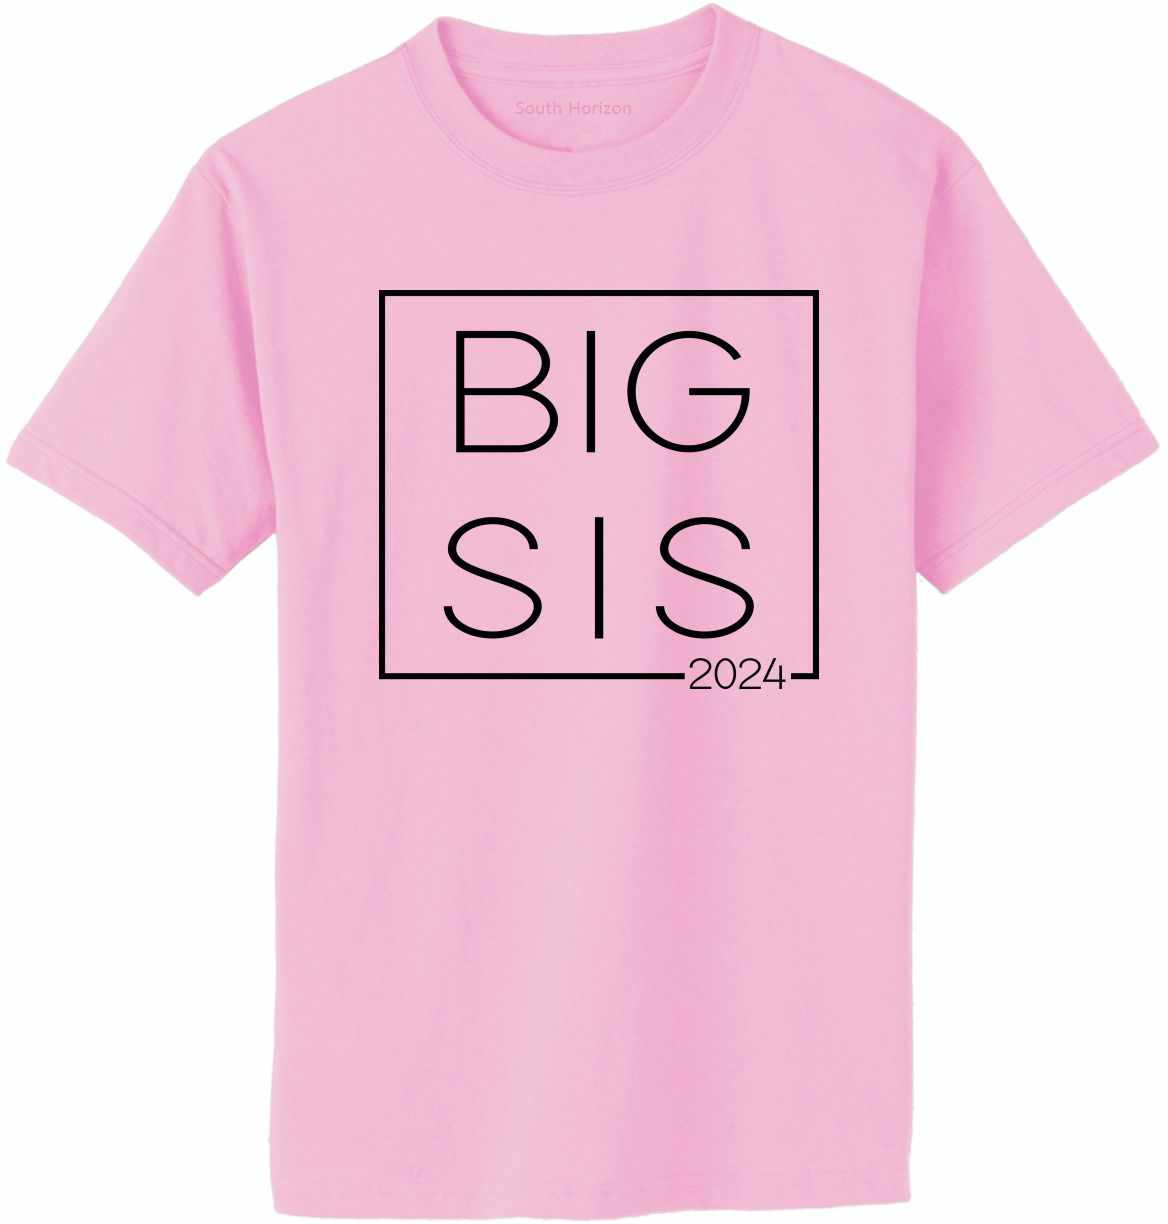 Big Sis 2024 - Big Sister Boxed on Adult T-Shirt